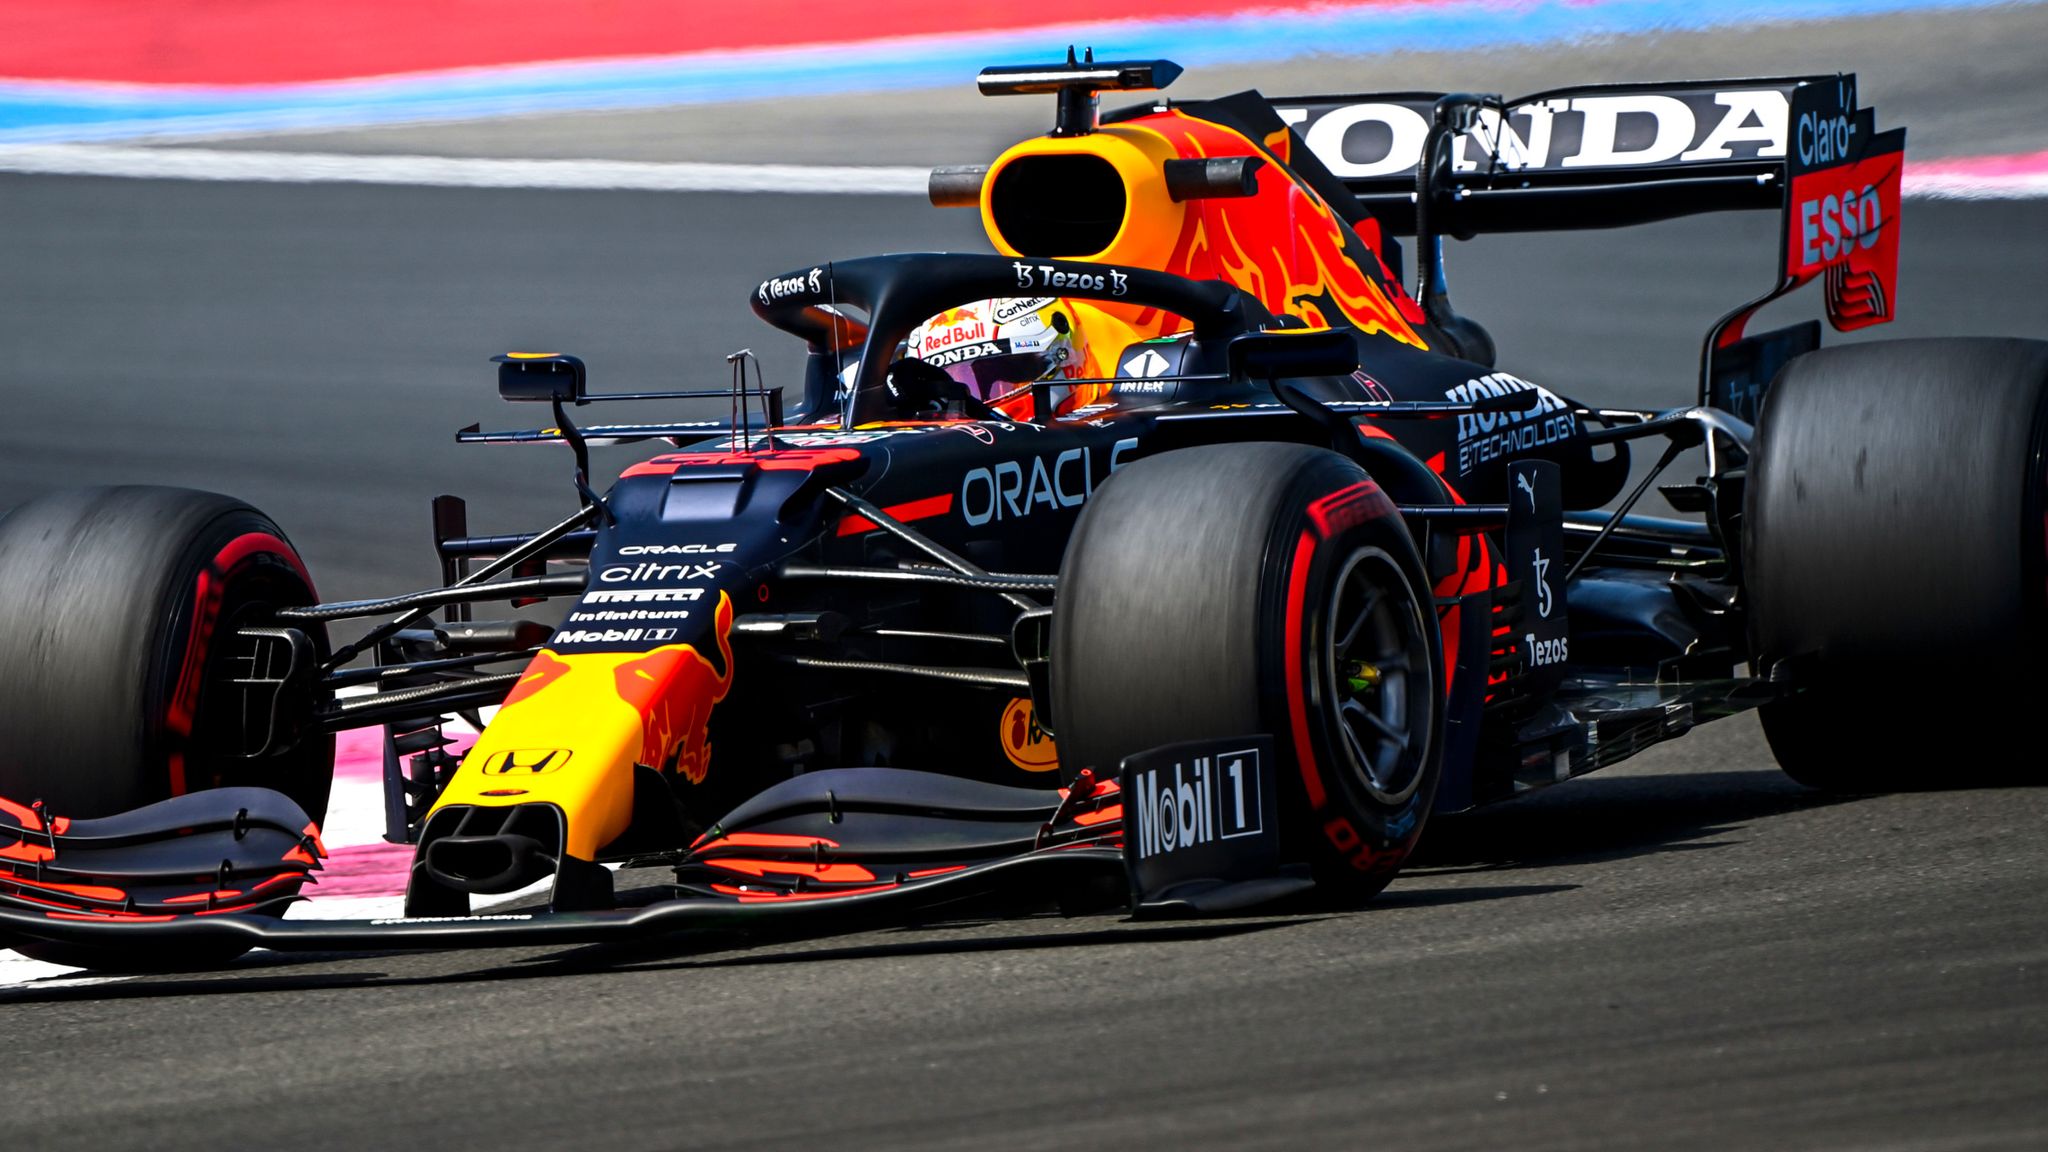 French Gp Max Verstappen Pulls Clear Of Valtteri Bottas In Practice Three Lewis Hamilton Adrift F1 News